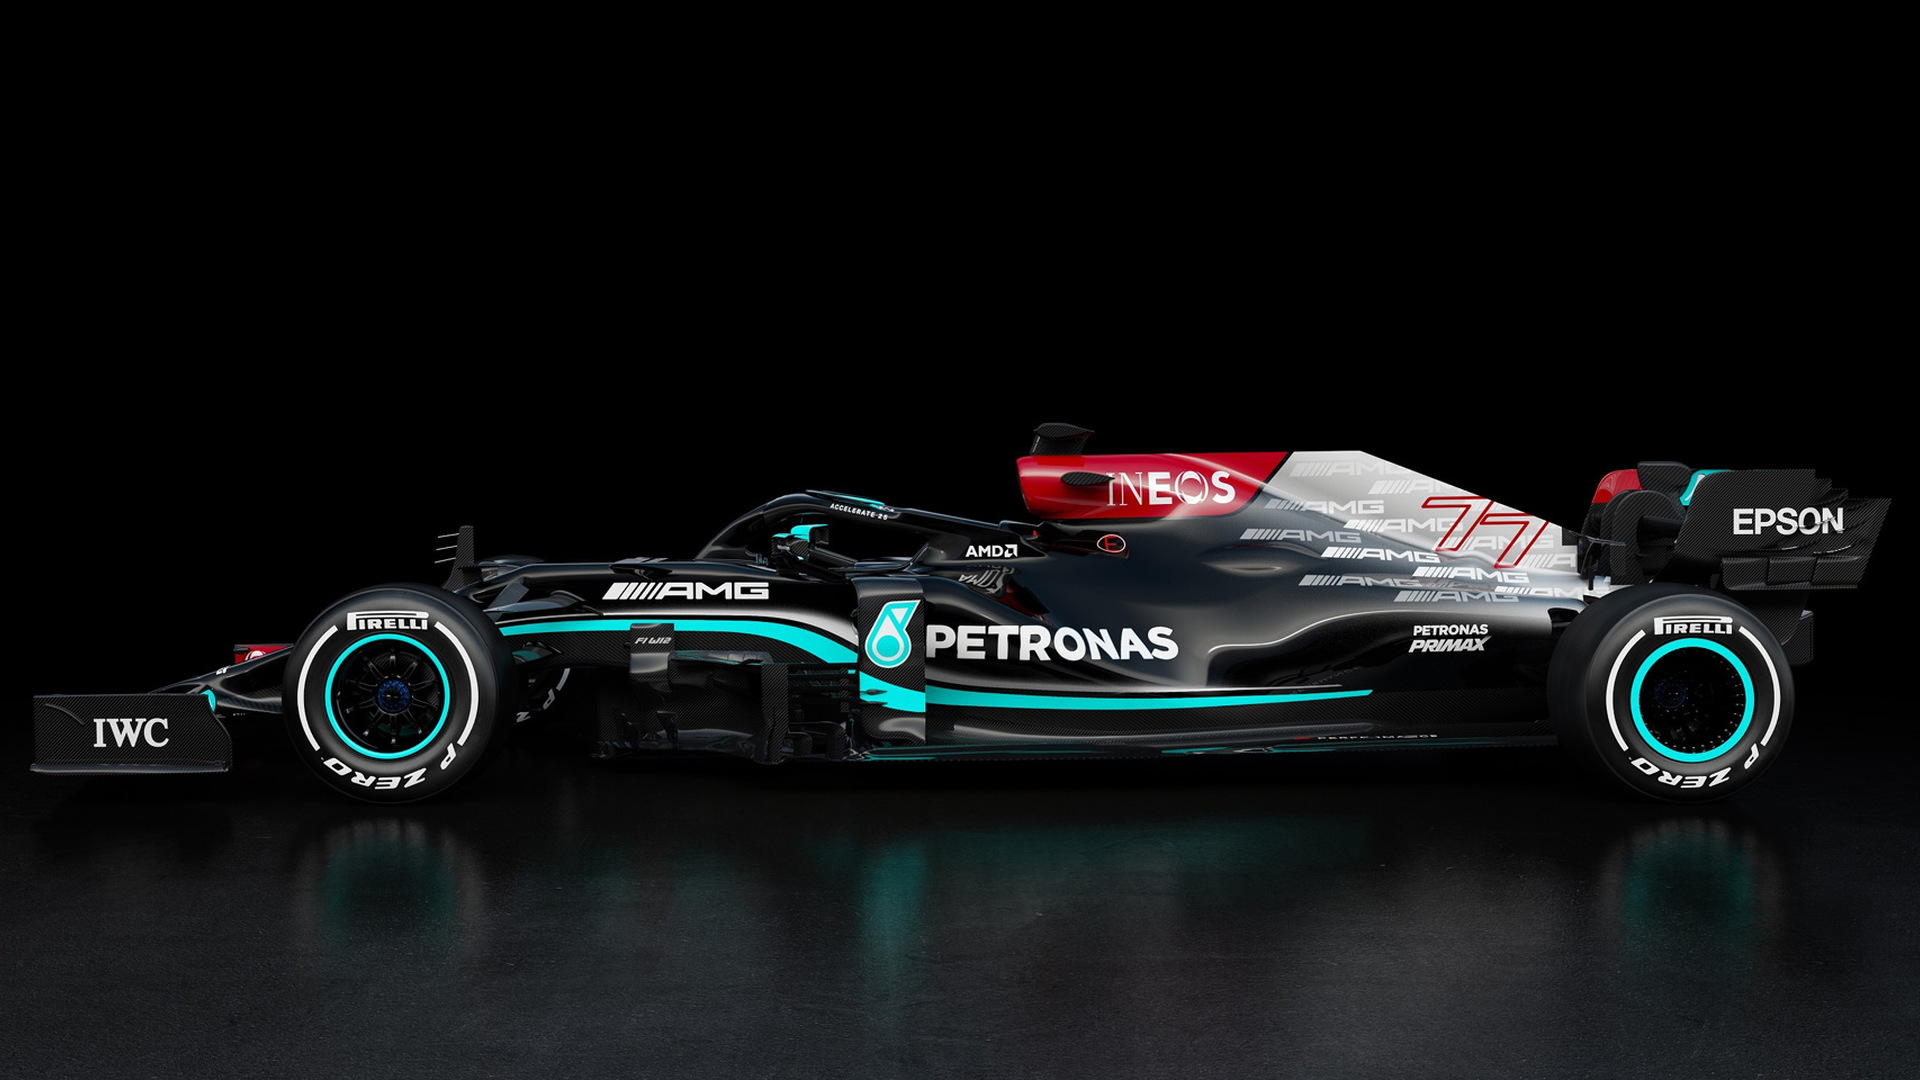 2021 Mercedes-Benz AMG W12 E Performance Formula One race car